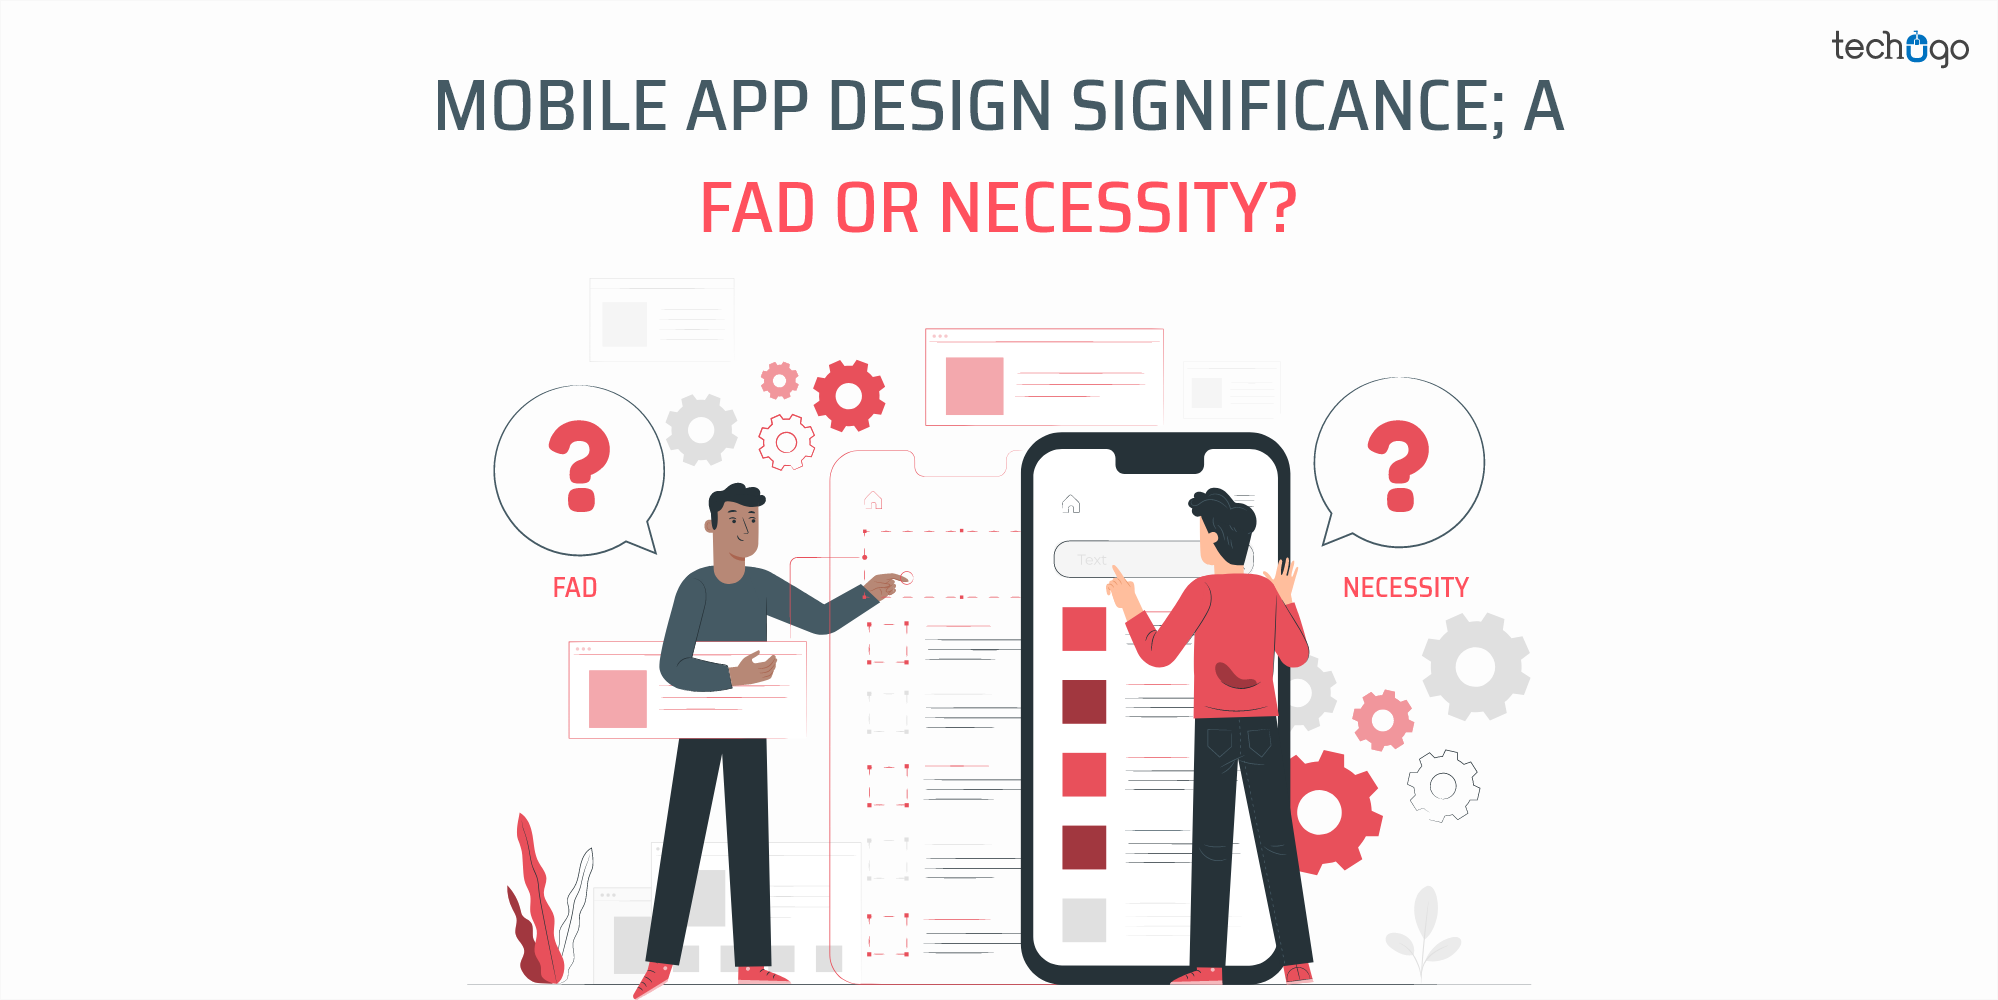 Mobile app design significance; a FAD or NECESSITY?